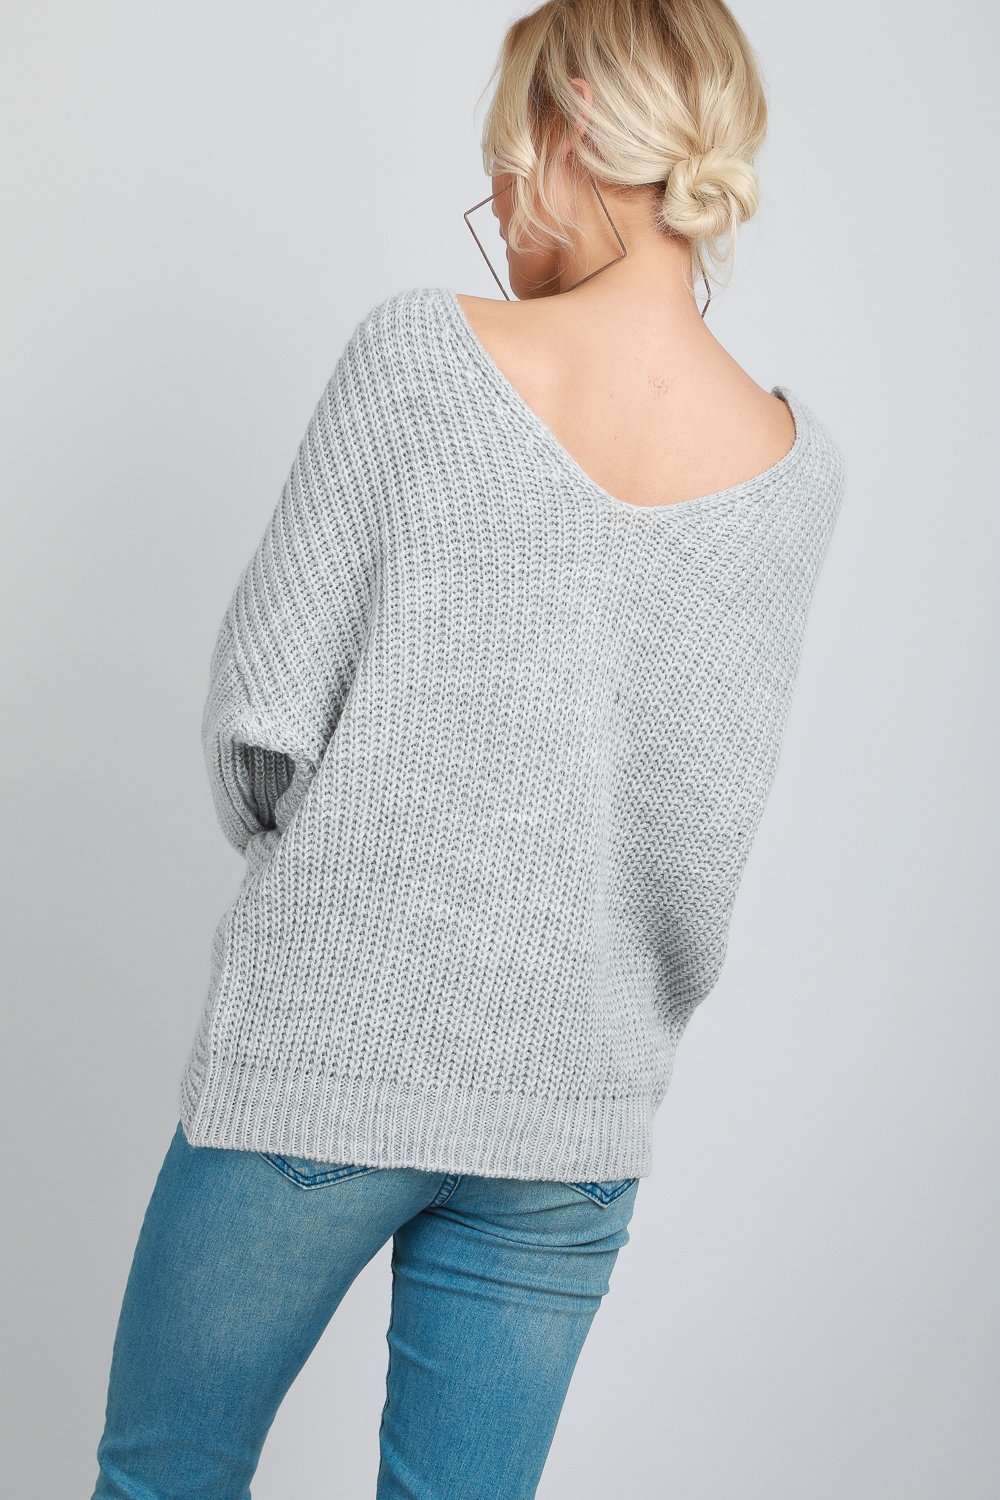 Elsi Twisted Front Oversized Knitted Jumper - bejealous-com